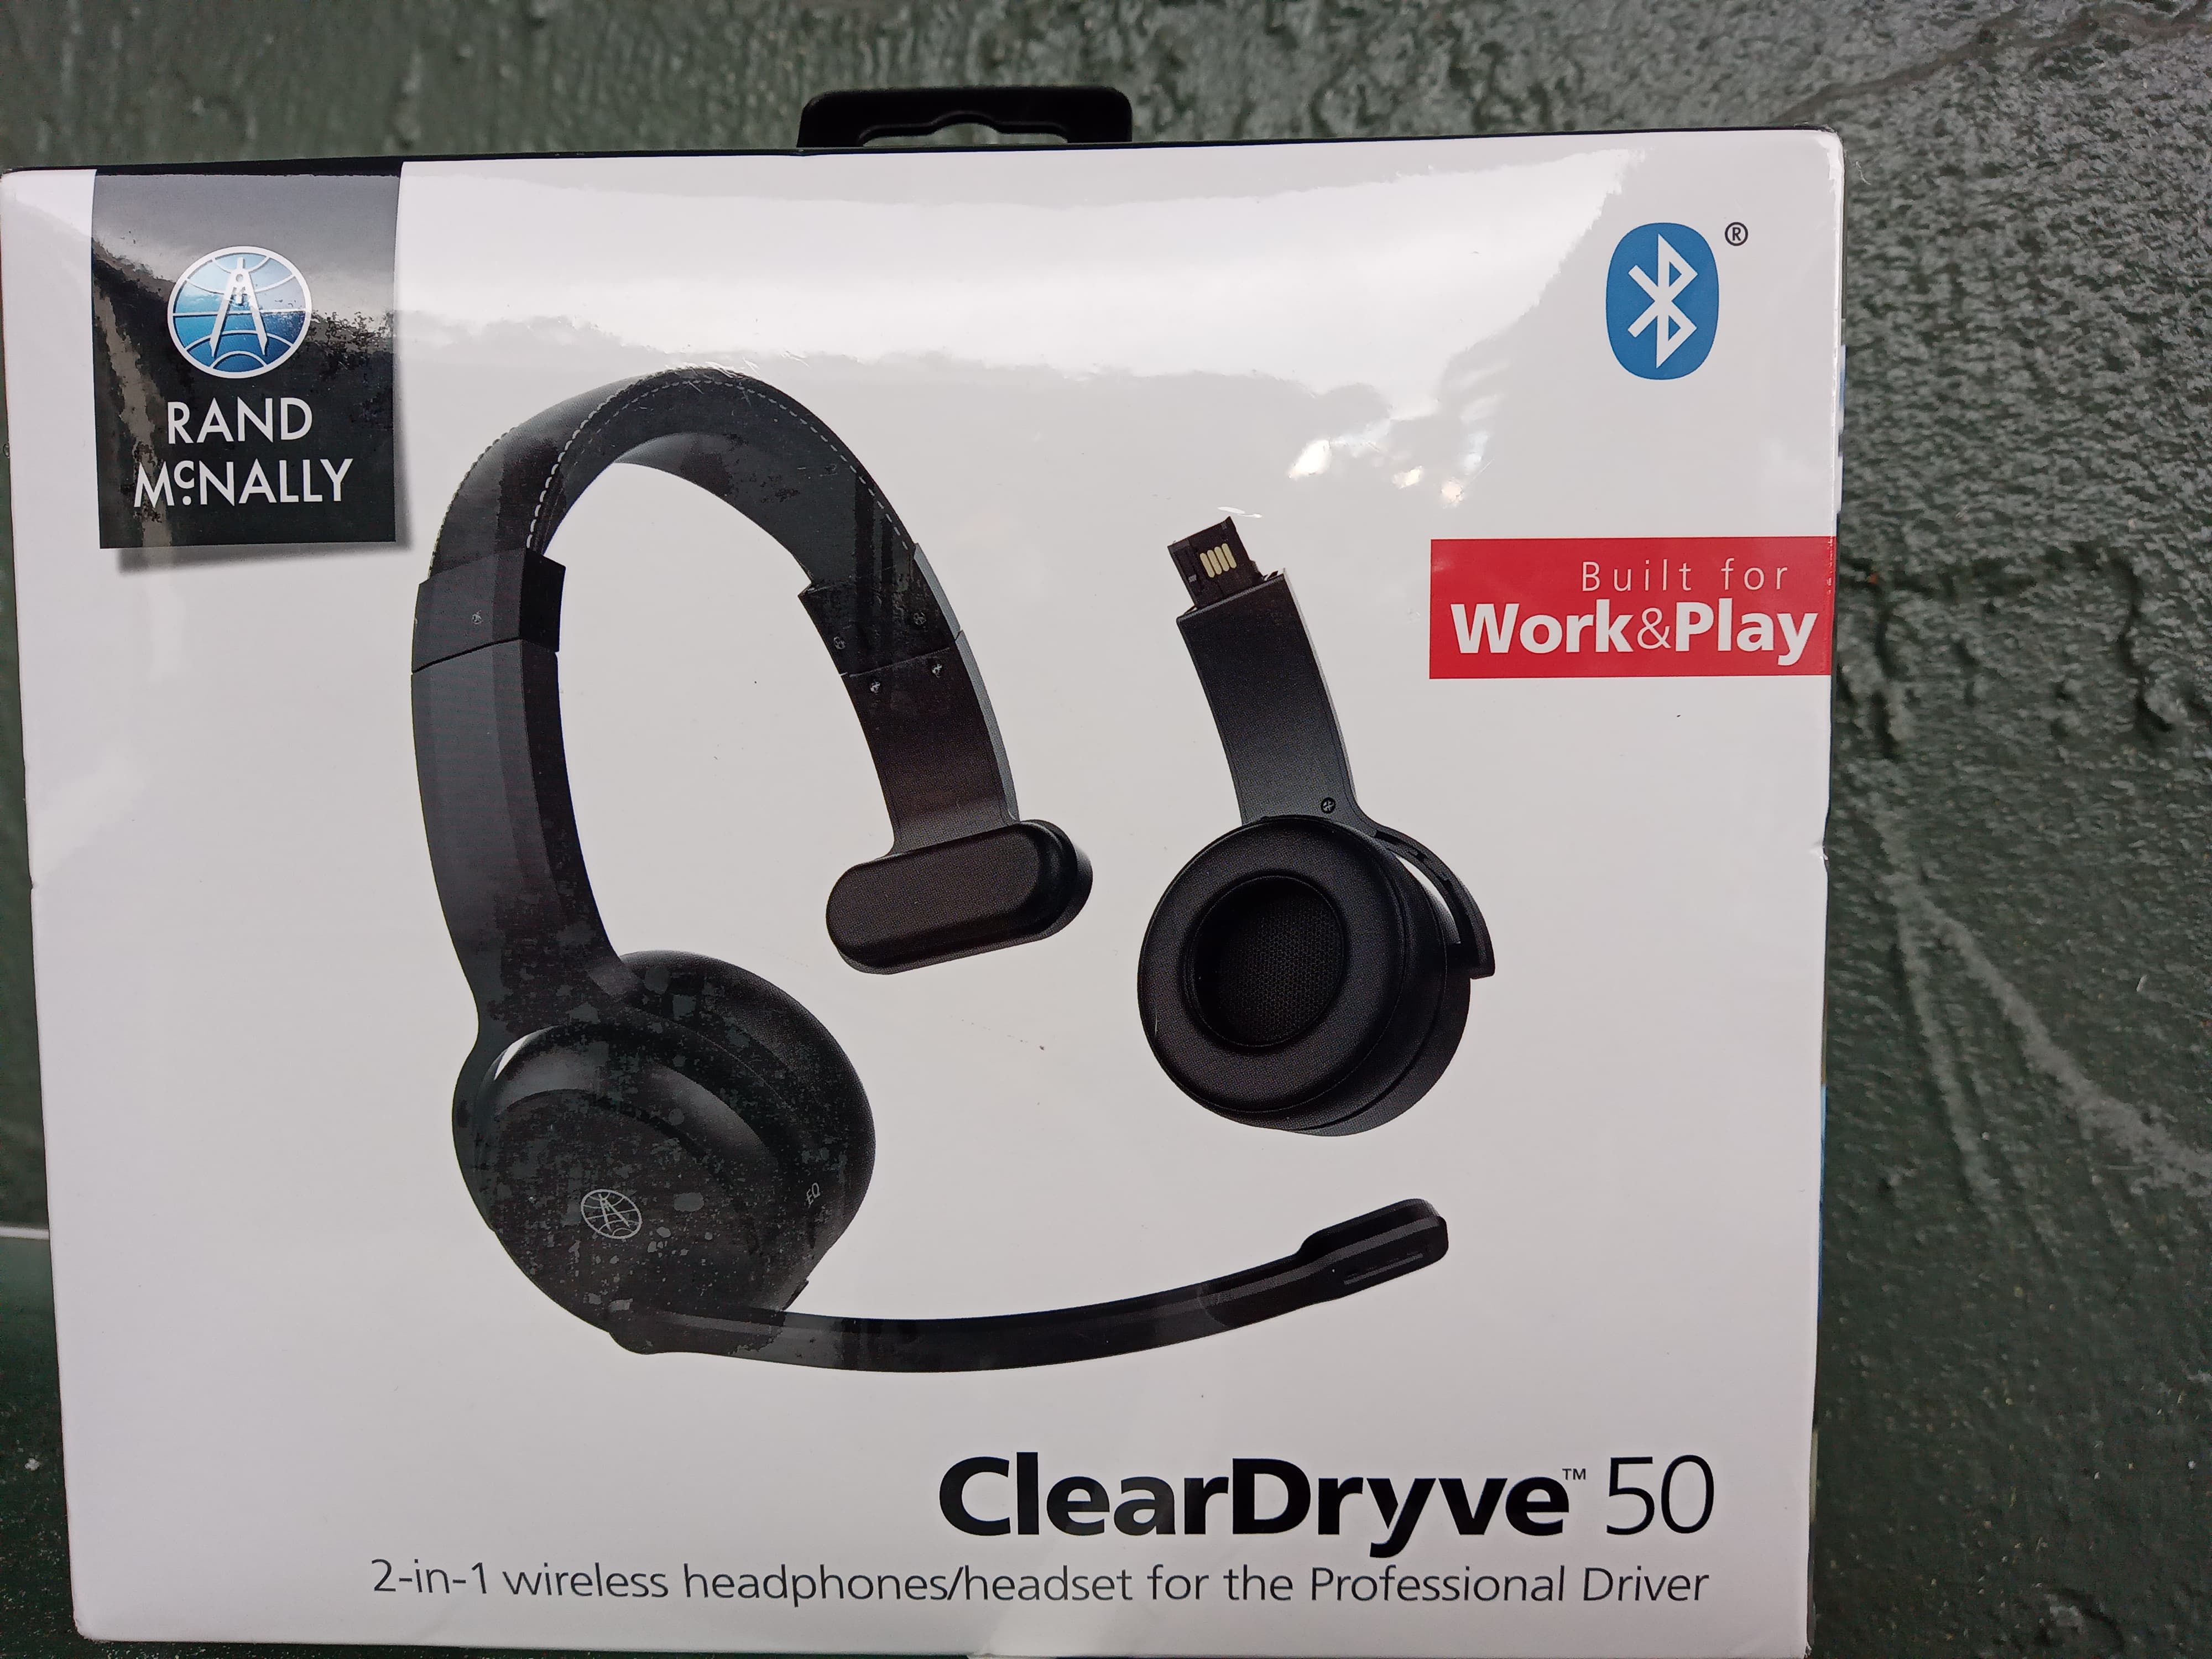 NEW ClearDryve 50 2-in-1 Bluetooth wireless headphones/headset